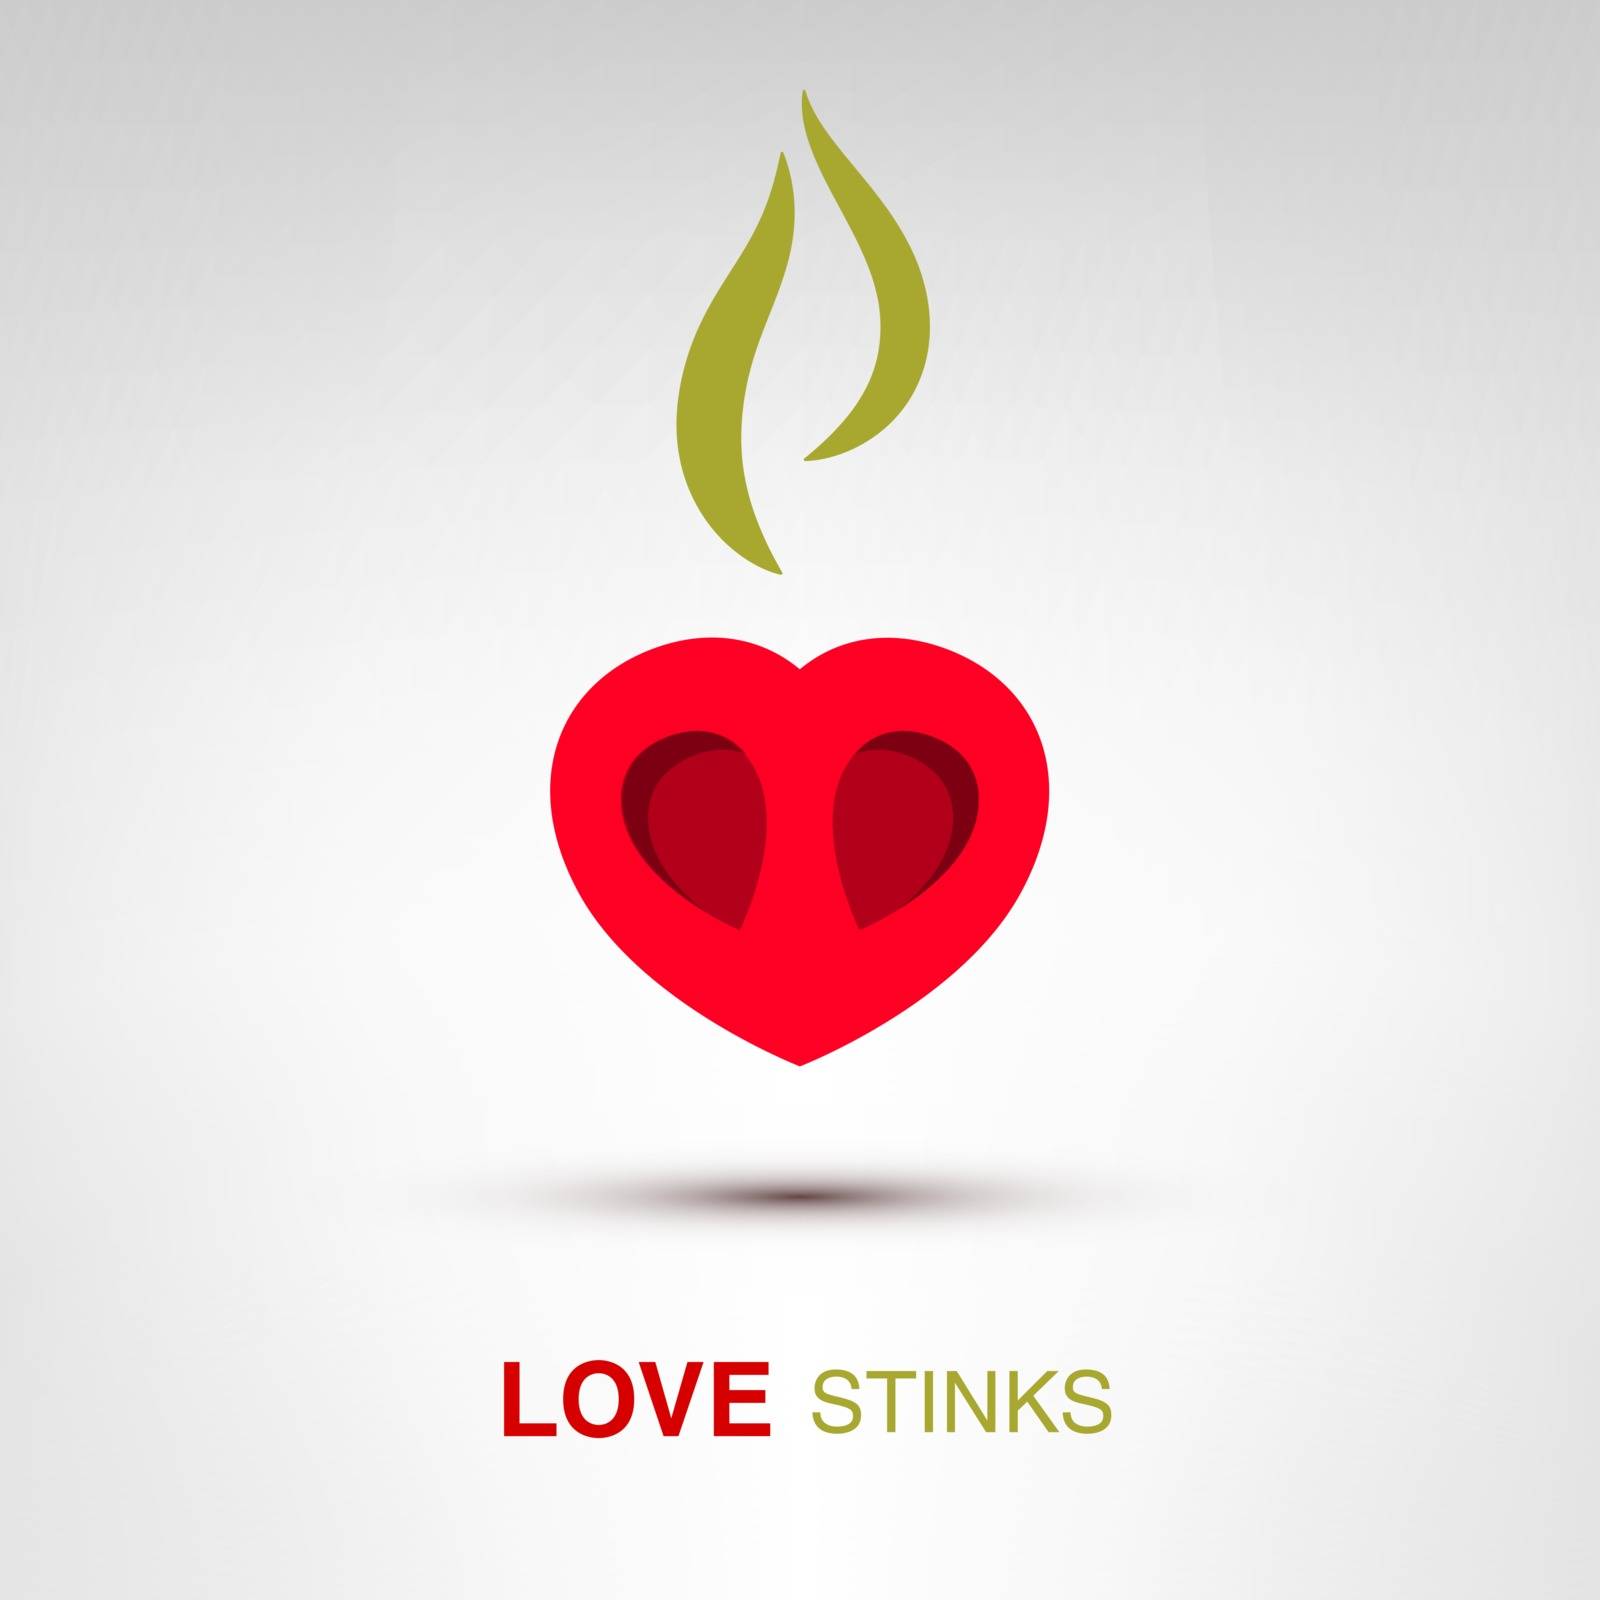 Love stinks - creative Valentines Day heart concept